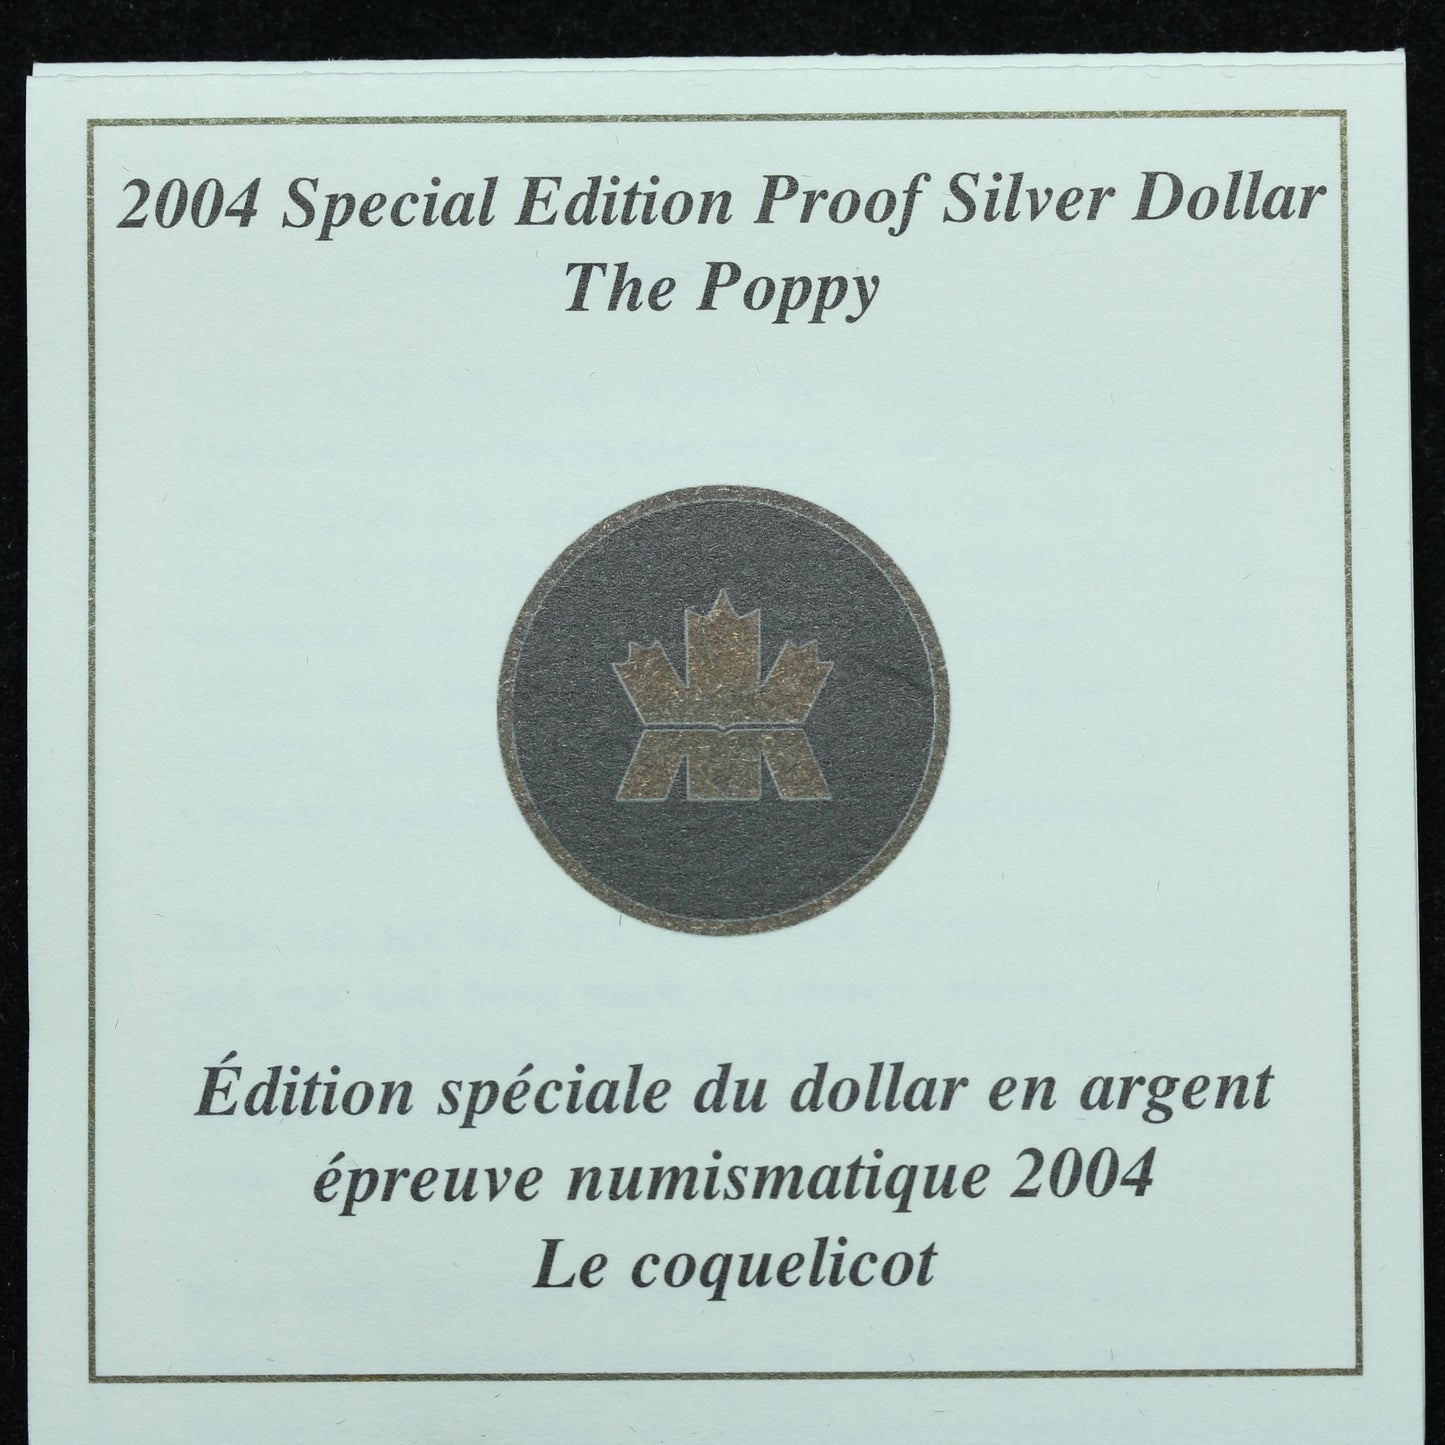 2004 Canada Special Edition Proof Silver Dollar - The Poppy w/ Box & COA